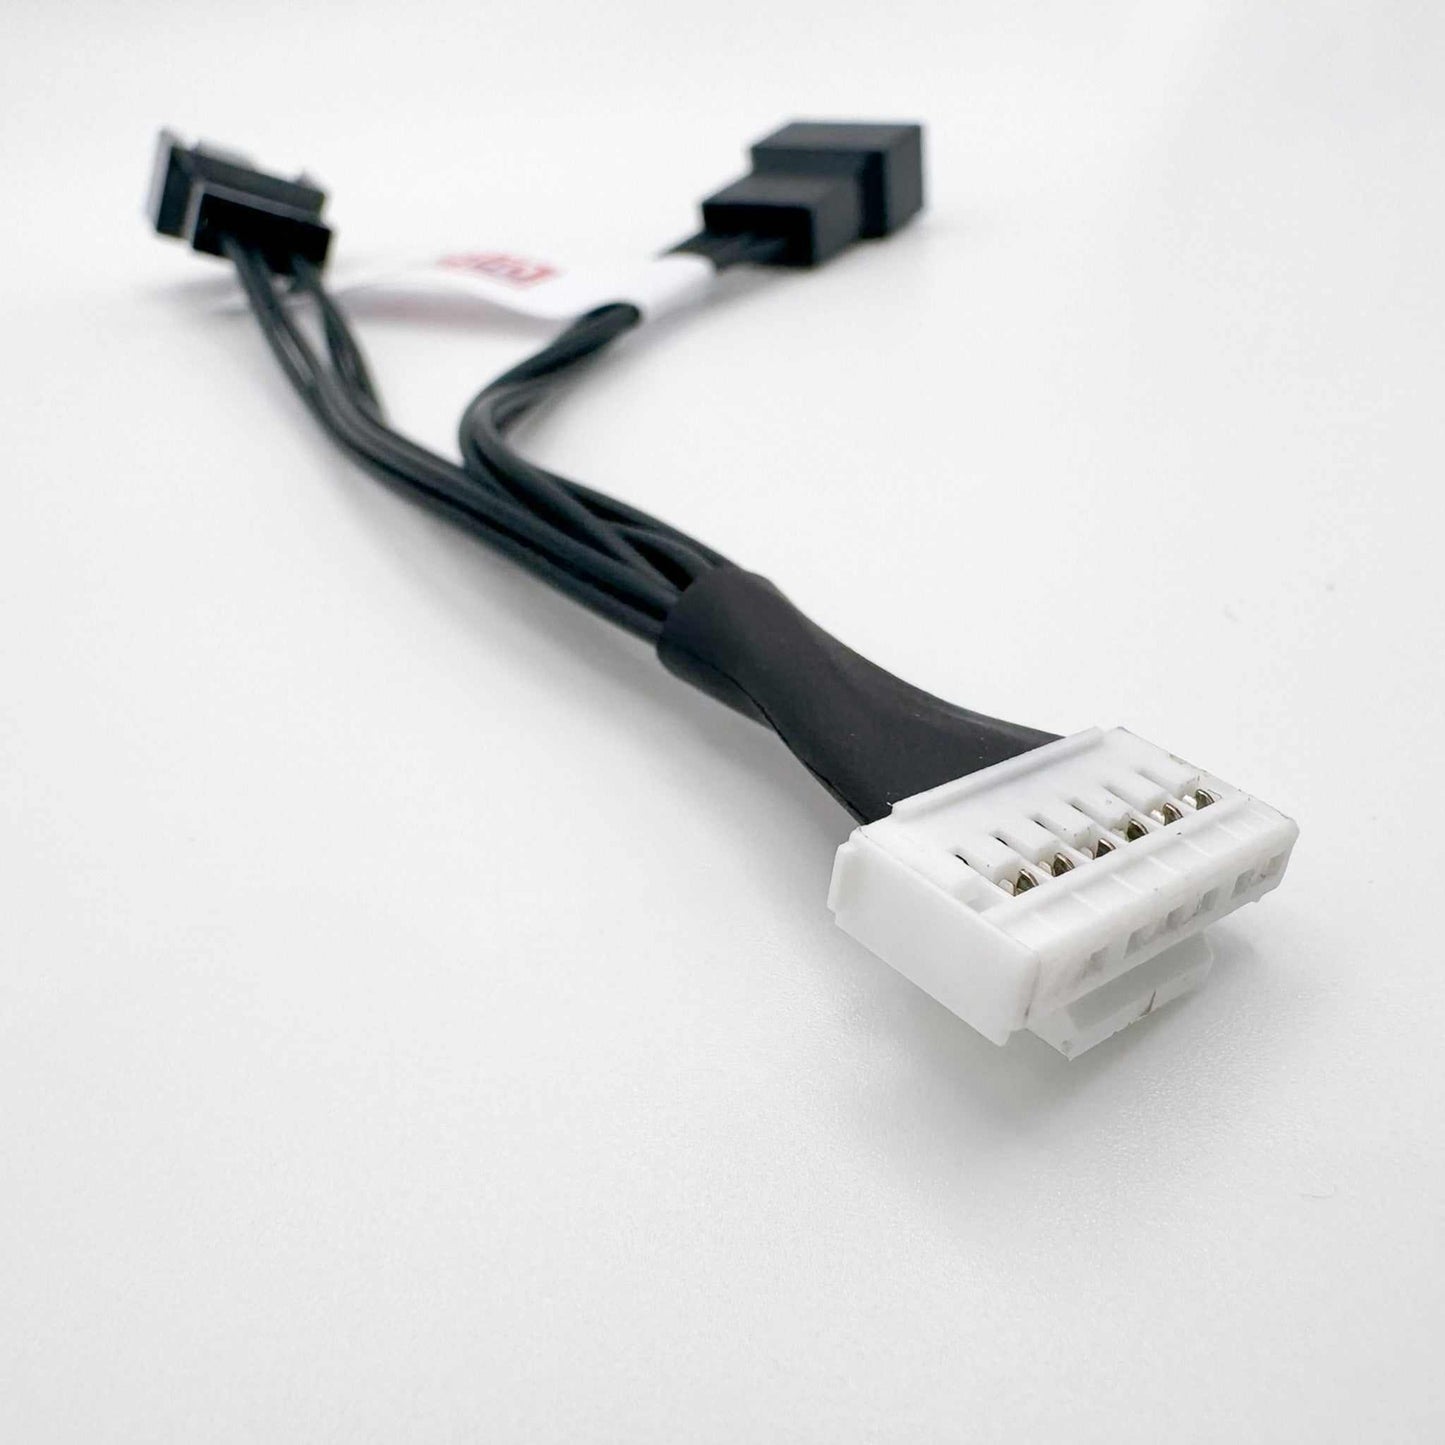 ASUS STRIX RTX 2060 2070 7-Pin PWM Adapter Deshroud Cable - GPUCONNECT.COM